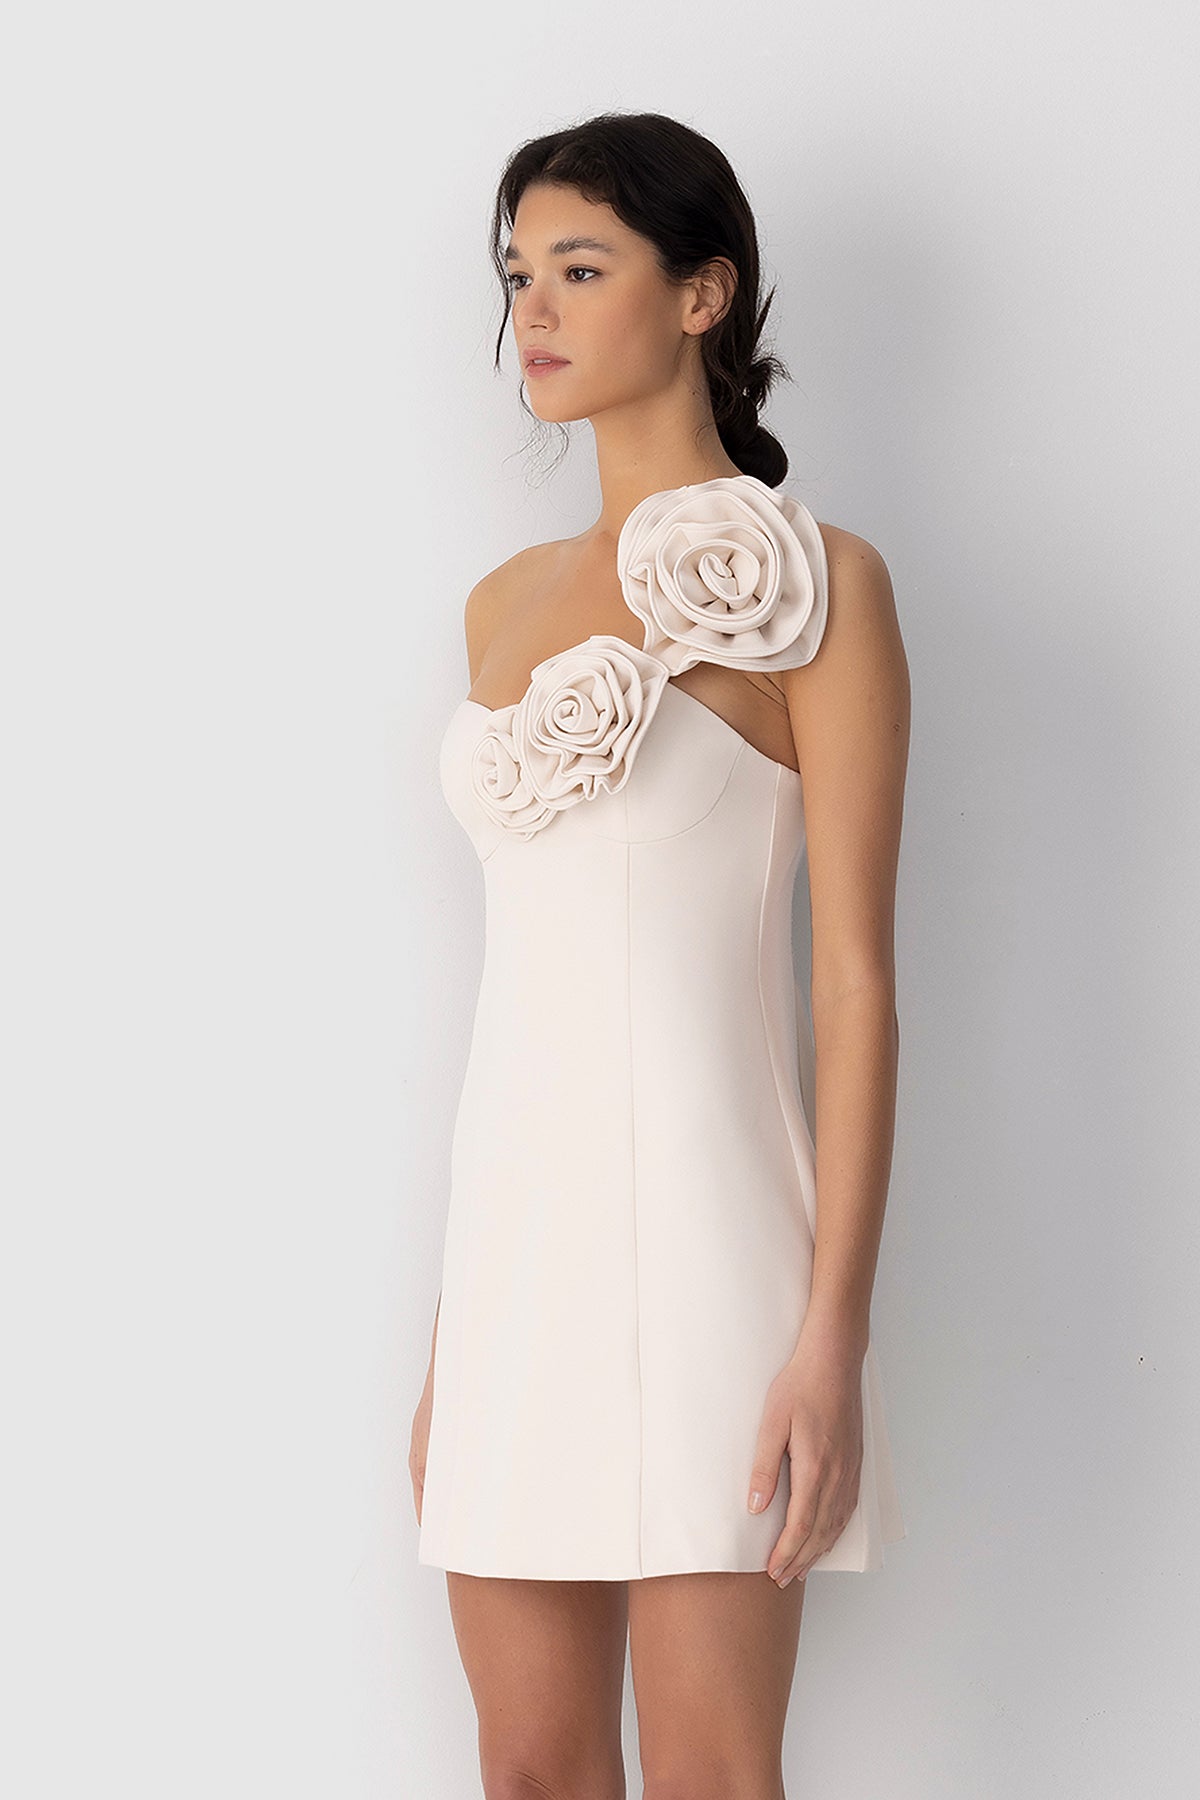 Flores Rose Mini Dress - Ivory